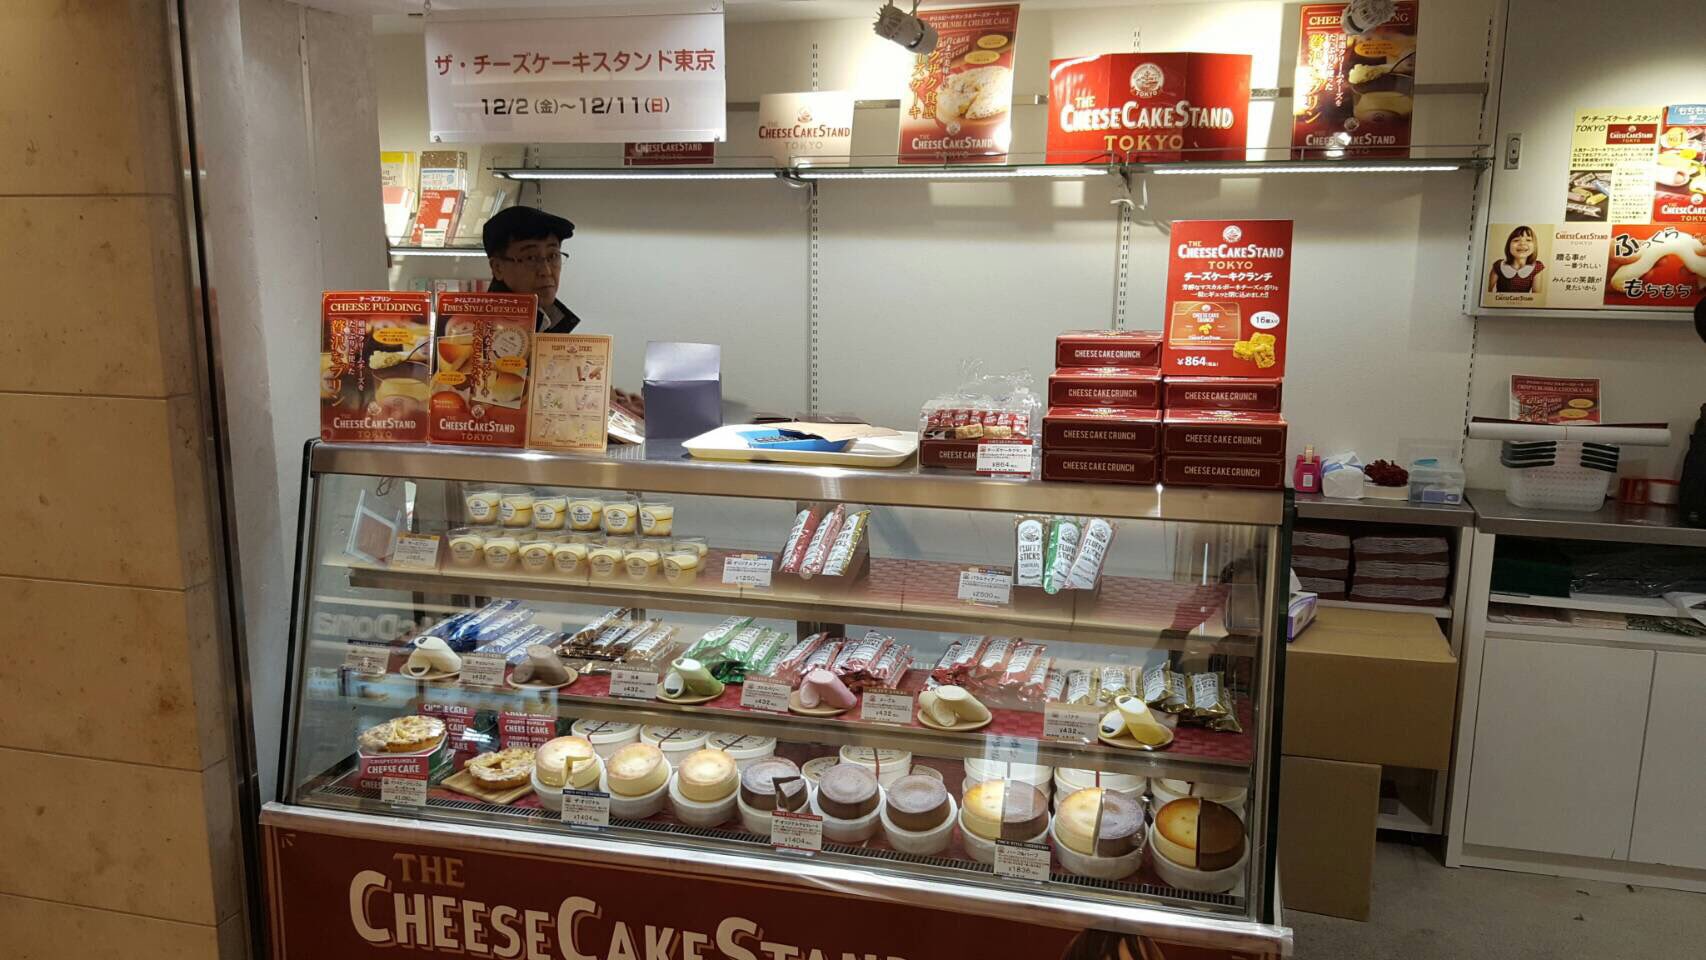 توییتر ハンズゲートショップ 公式 در توییتر 名古屋駅地下ハンズゲートショップでザ チーズケーキスタンドtokyoが11日まで期間限定出店です 特製チーズケーキや 新感覚の もちもちフラッフィースティックスがおすすめ ゲートショップ T Co